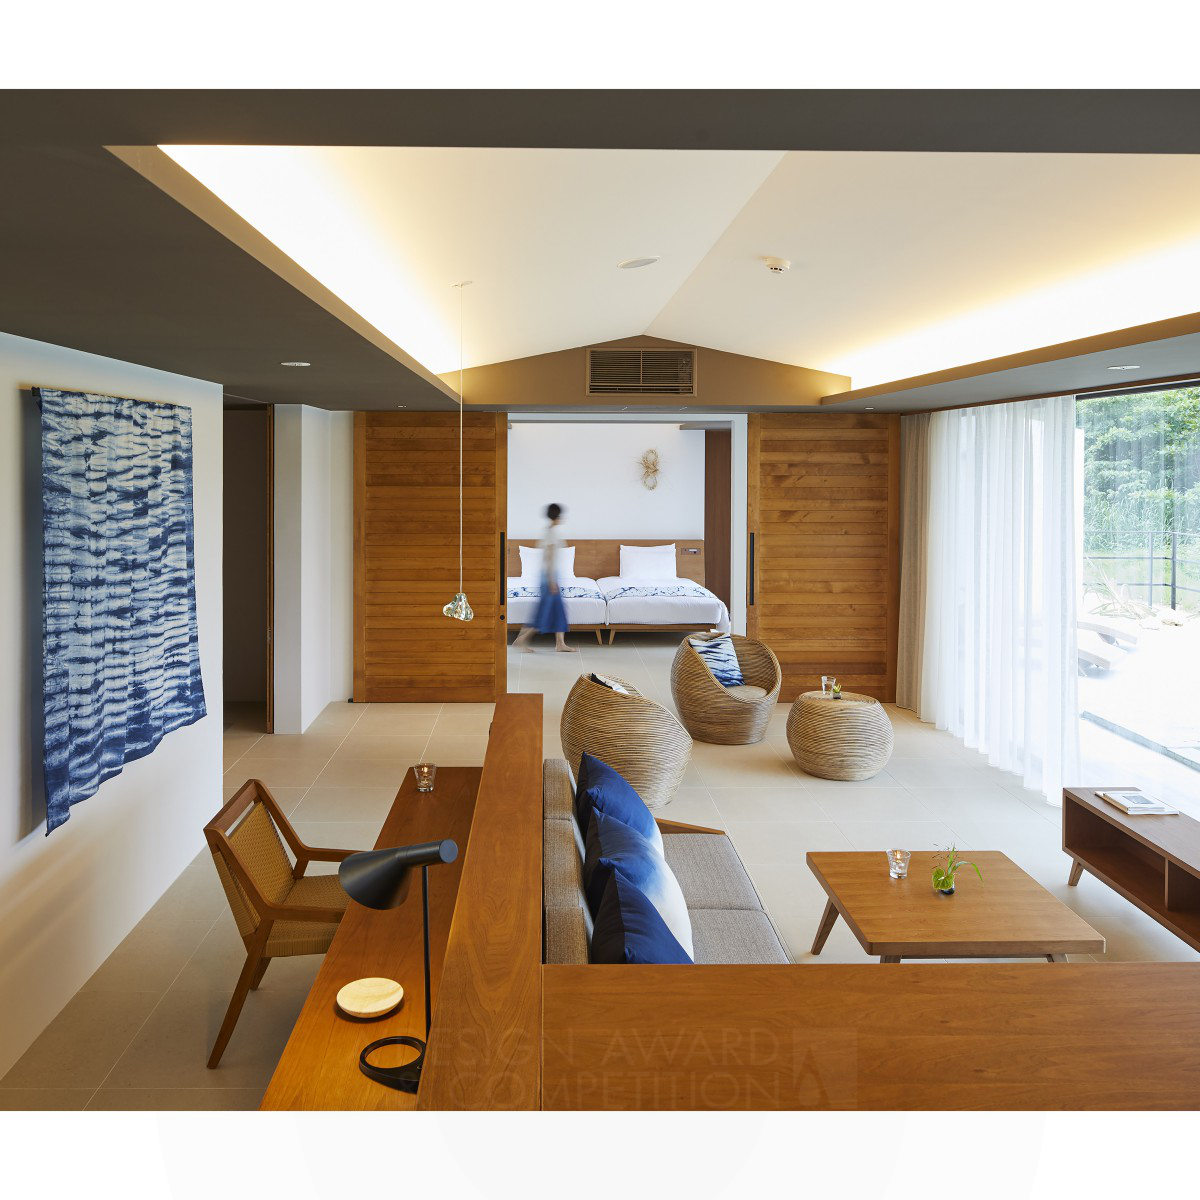 The Rescape Resort Hotel by Uds Ltd. Bronze Interior Space and Exhibition Design Award Winner 2021 